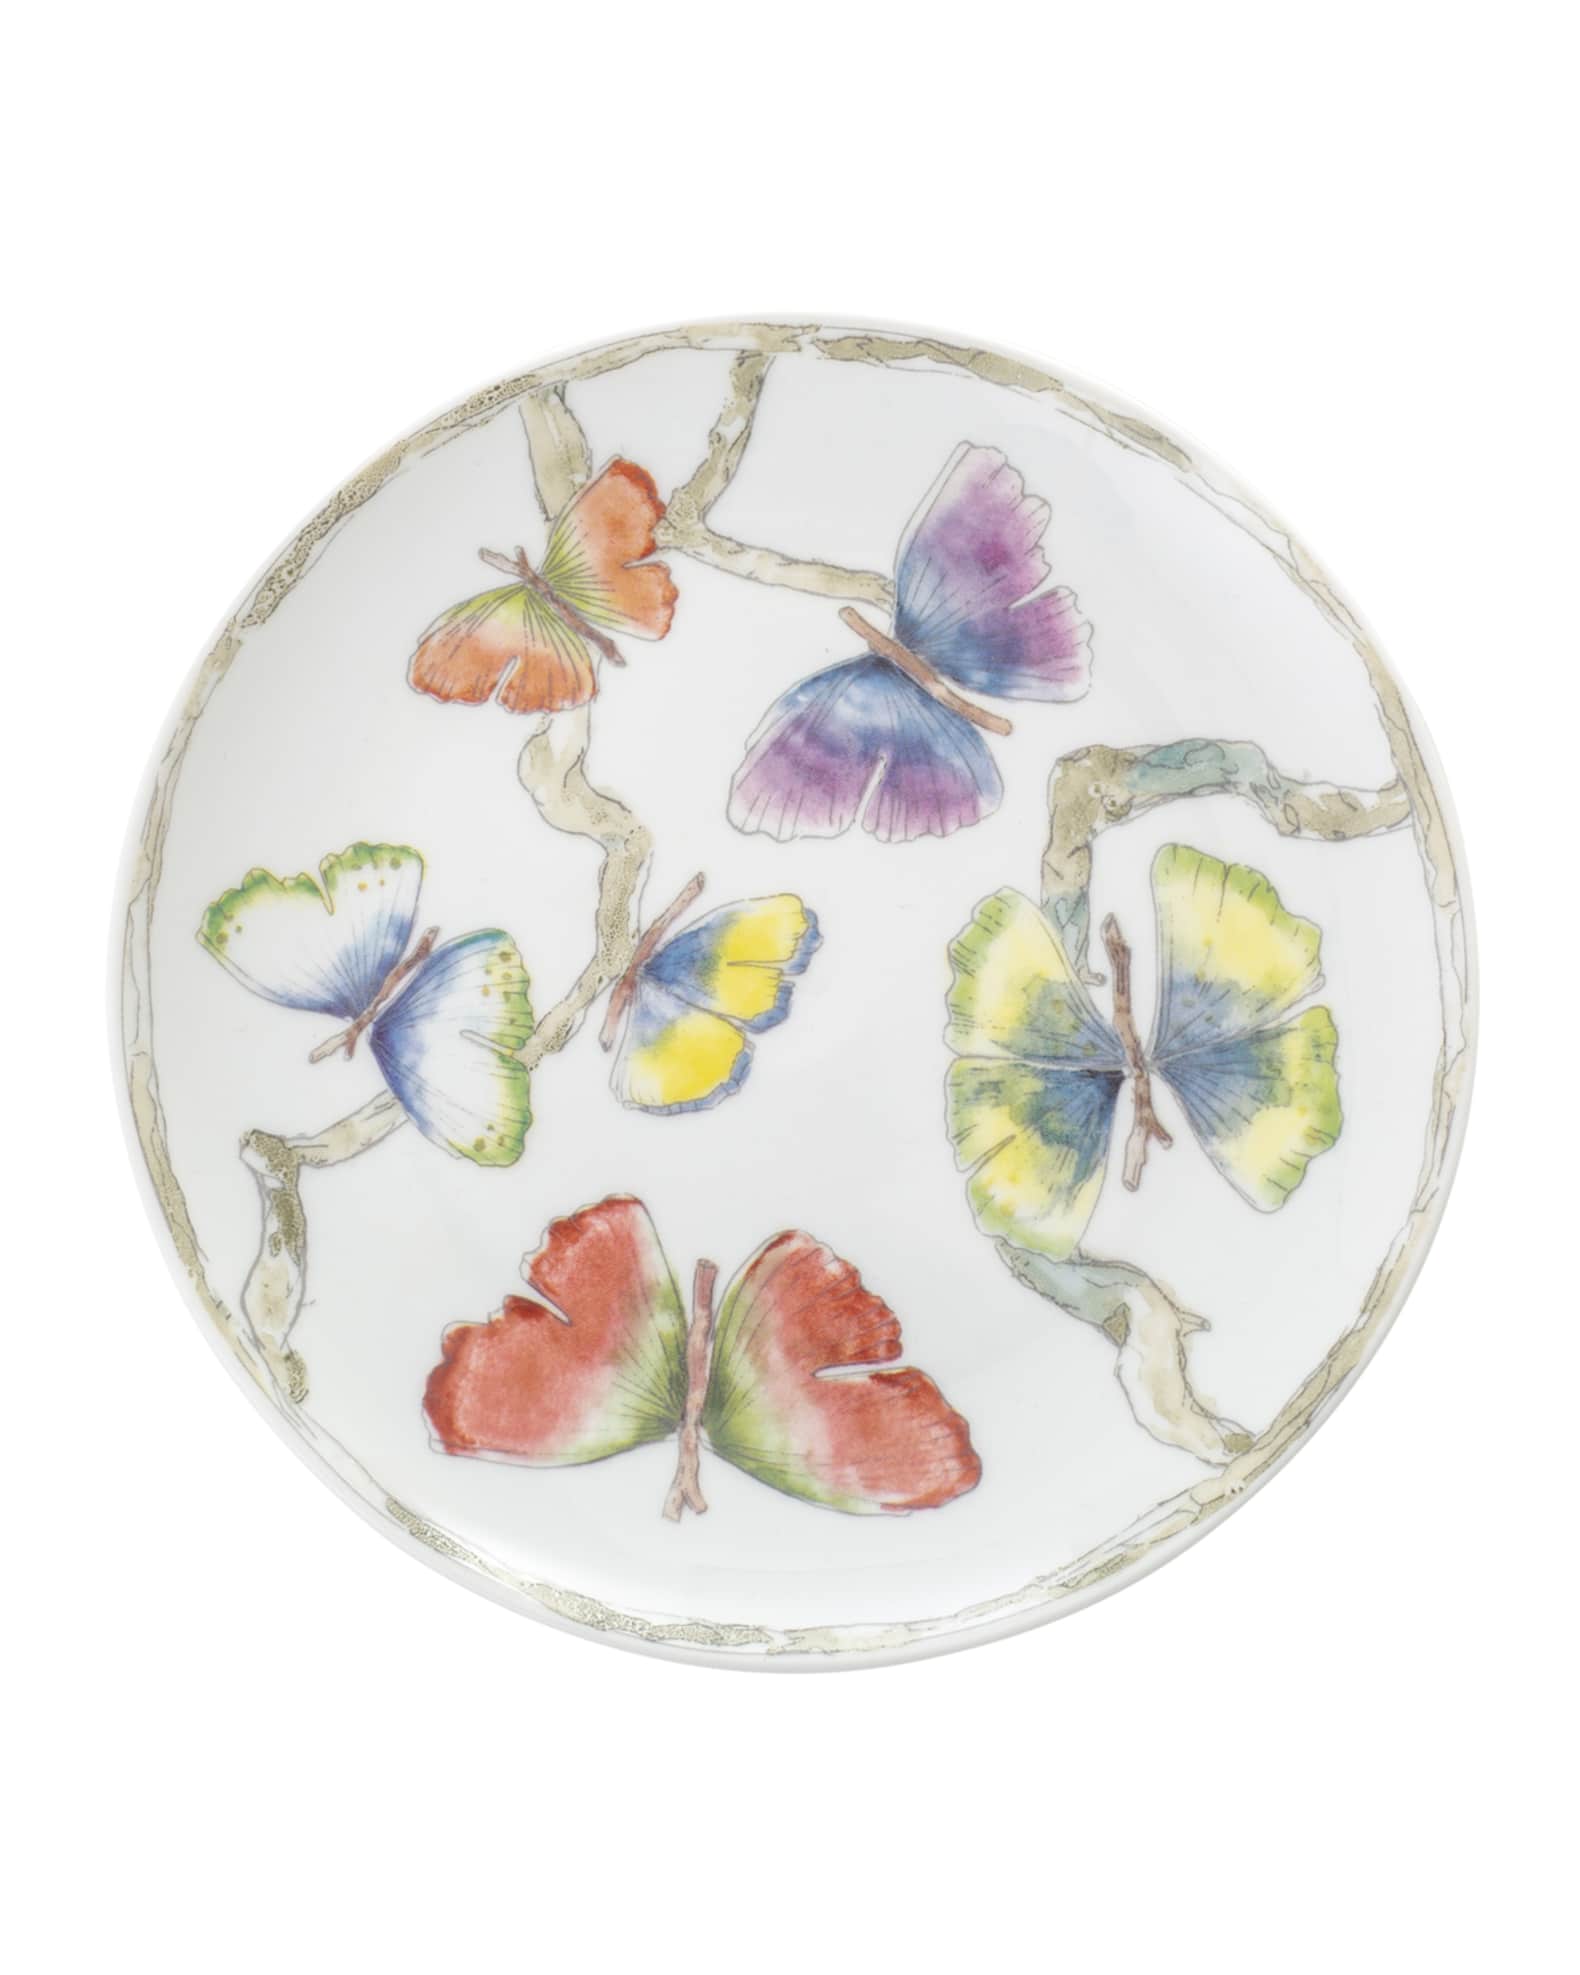 Michael Aram Butterfly Ginkgo Tidbit Plates, Set of 4